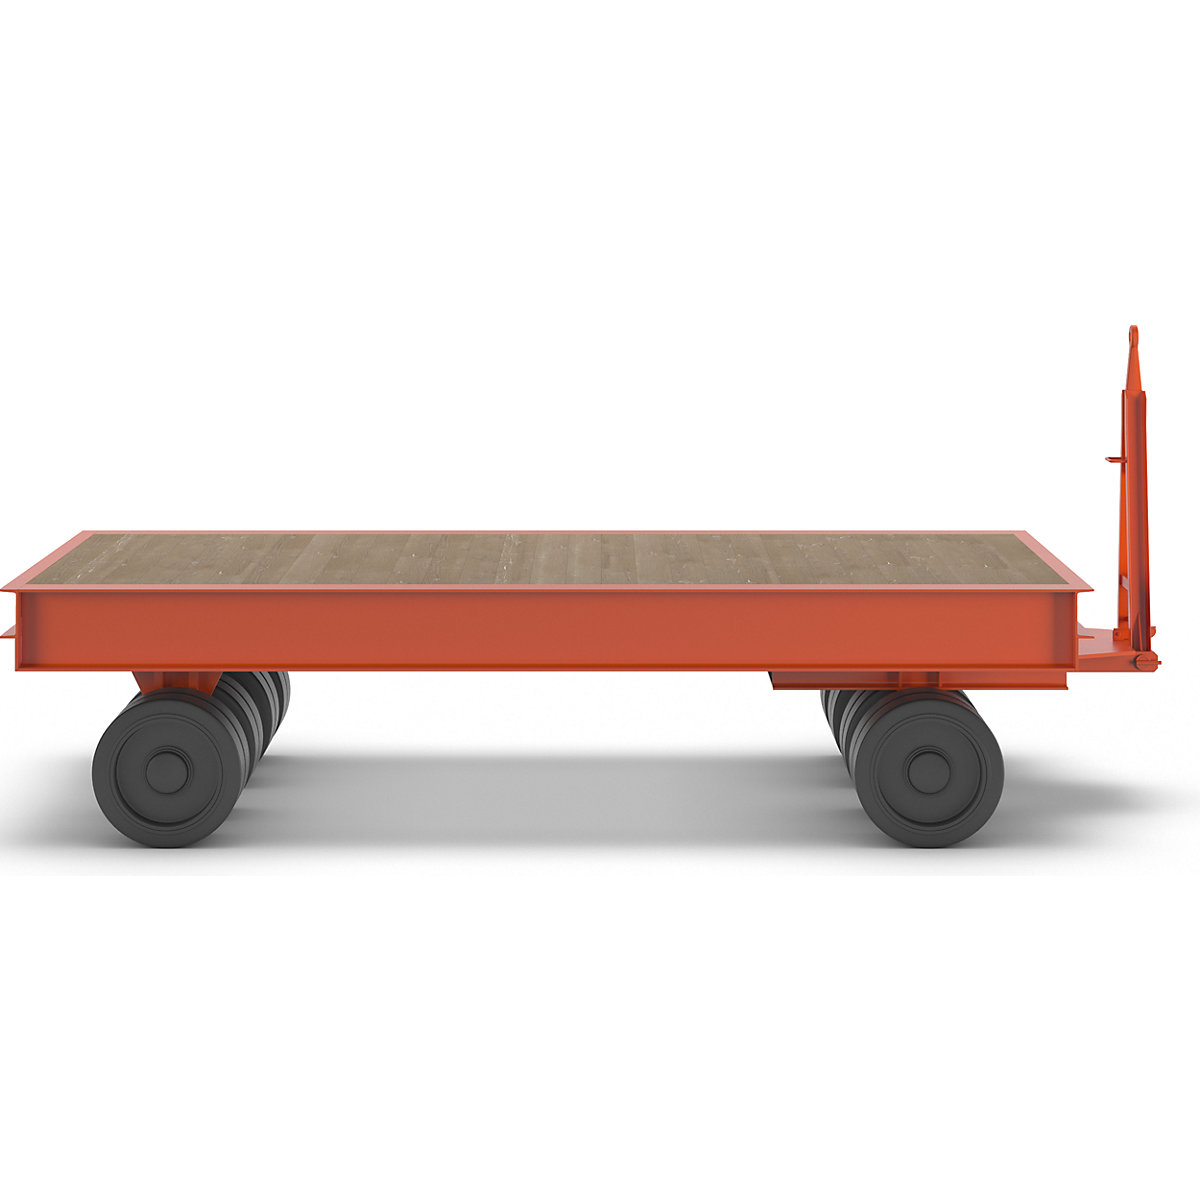 Heavy goods trailer (Product illustration 3)-2